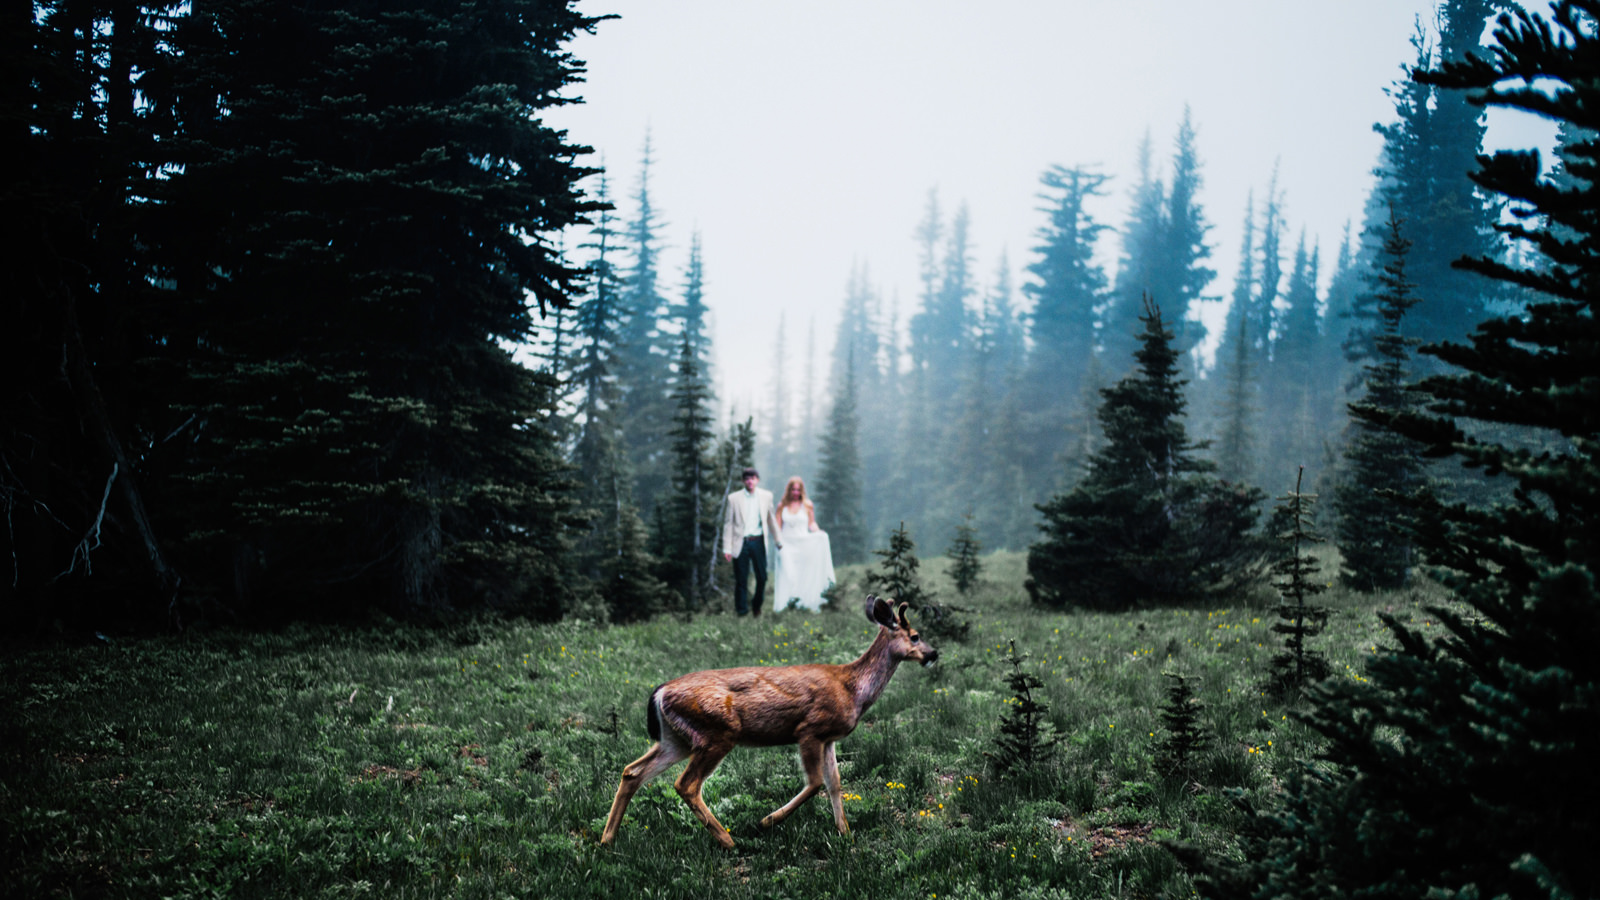 004-epic-foggy-wedding-photo-with-deer-at-mt-rainier-national-park-by-ryan-flynn.jpg